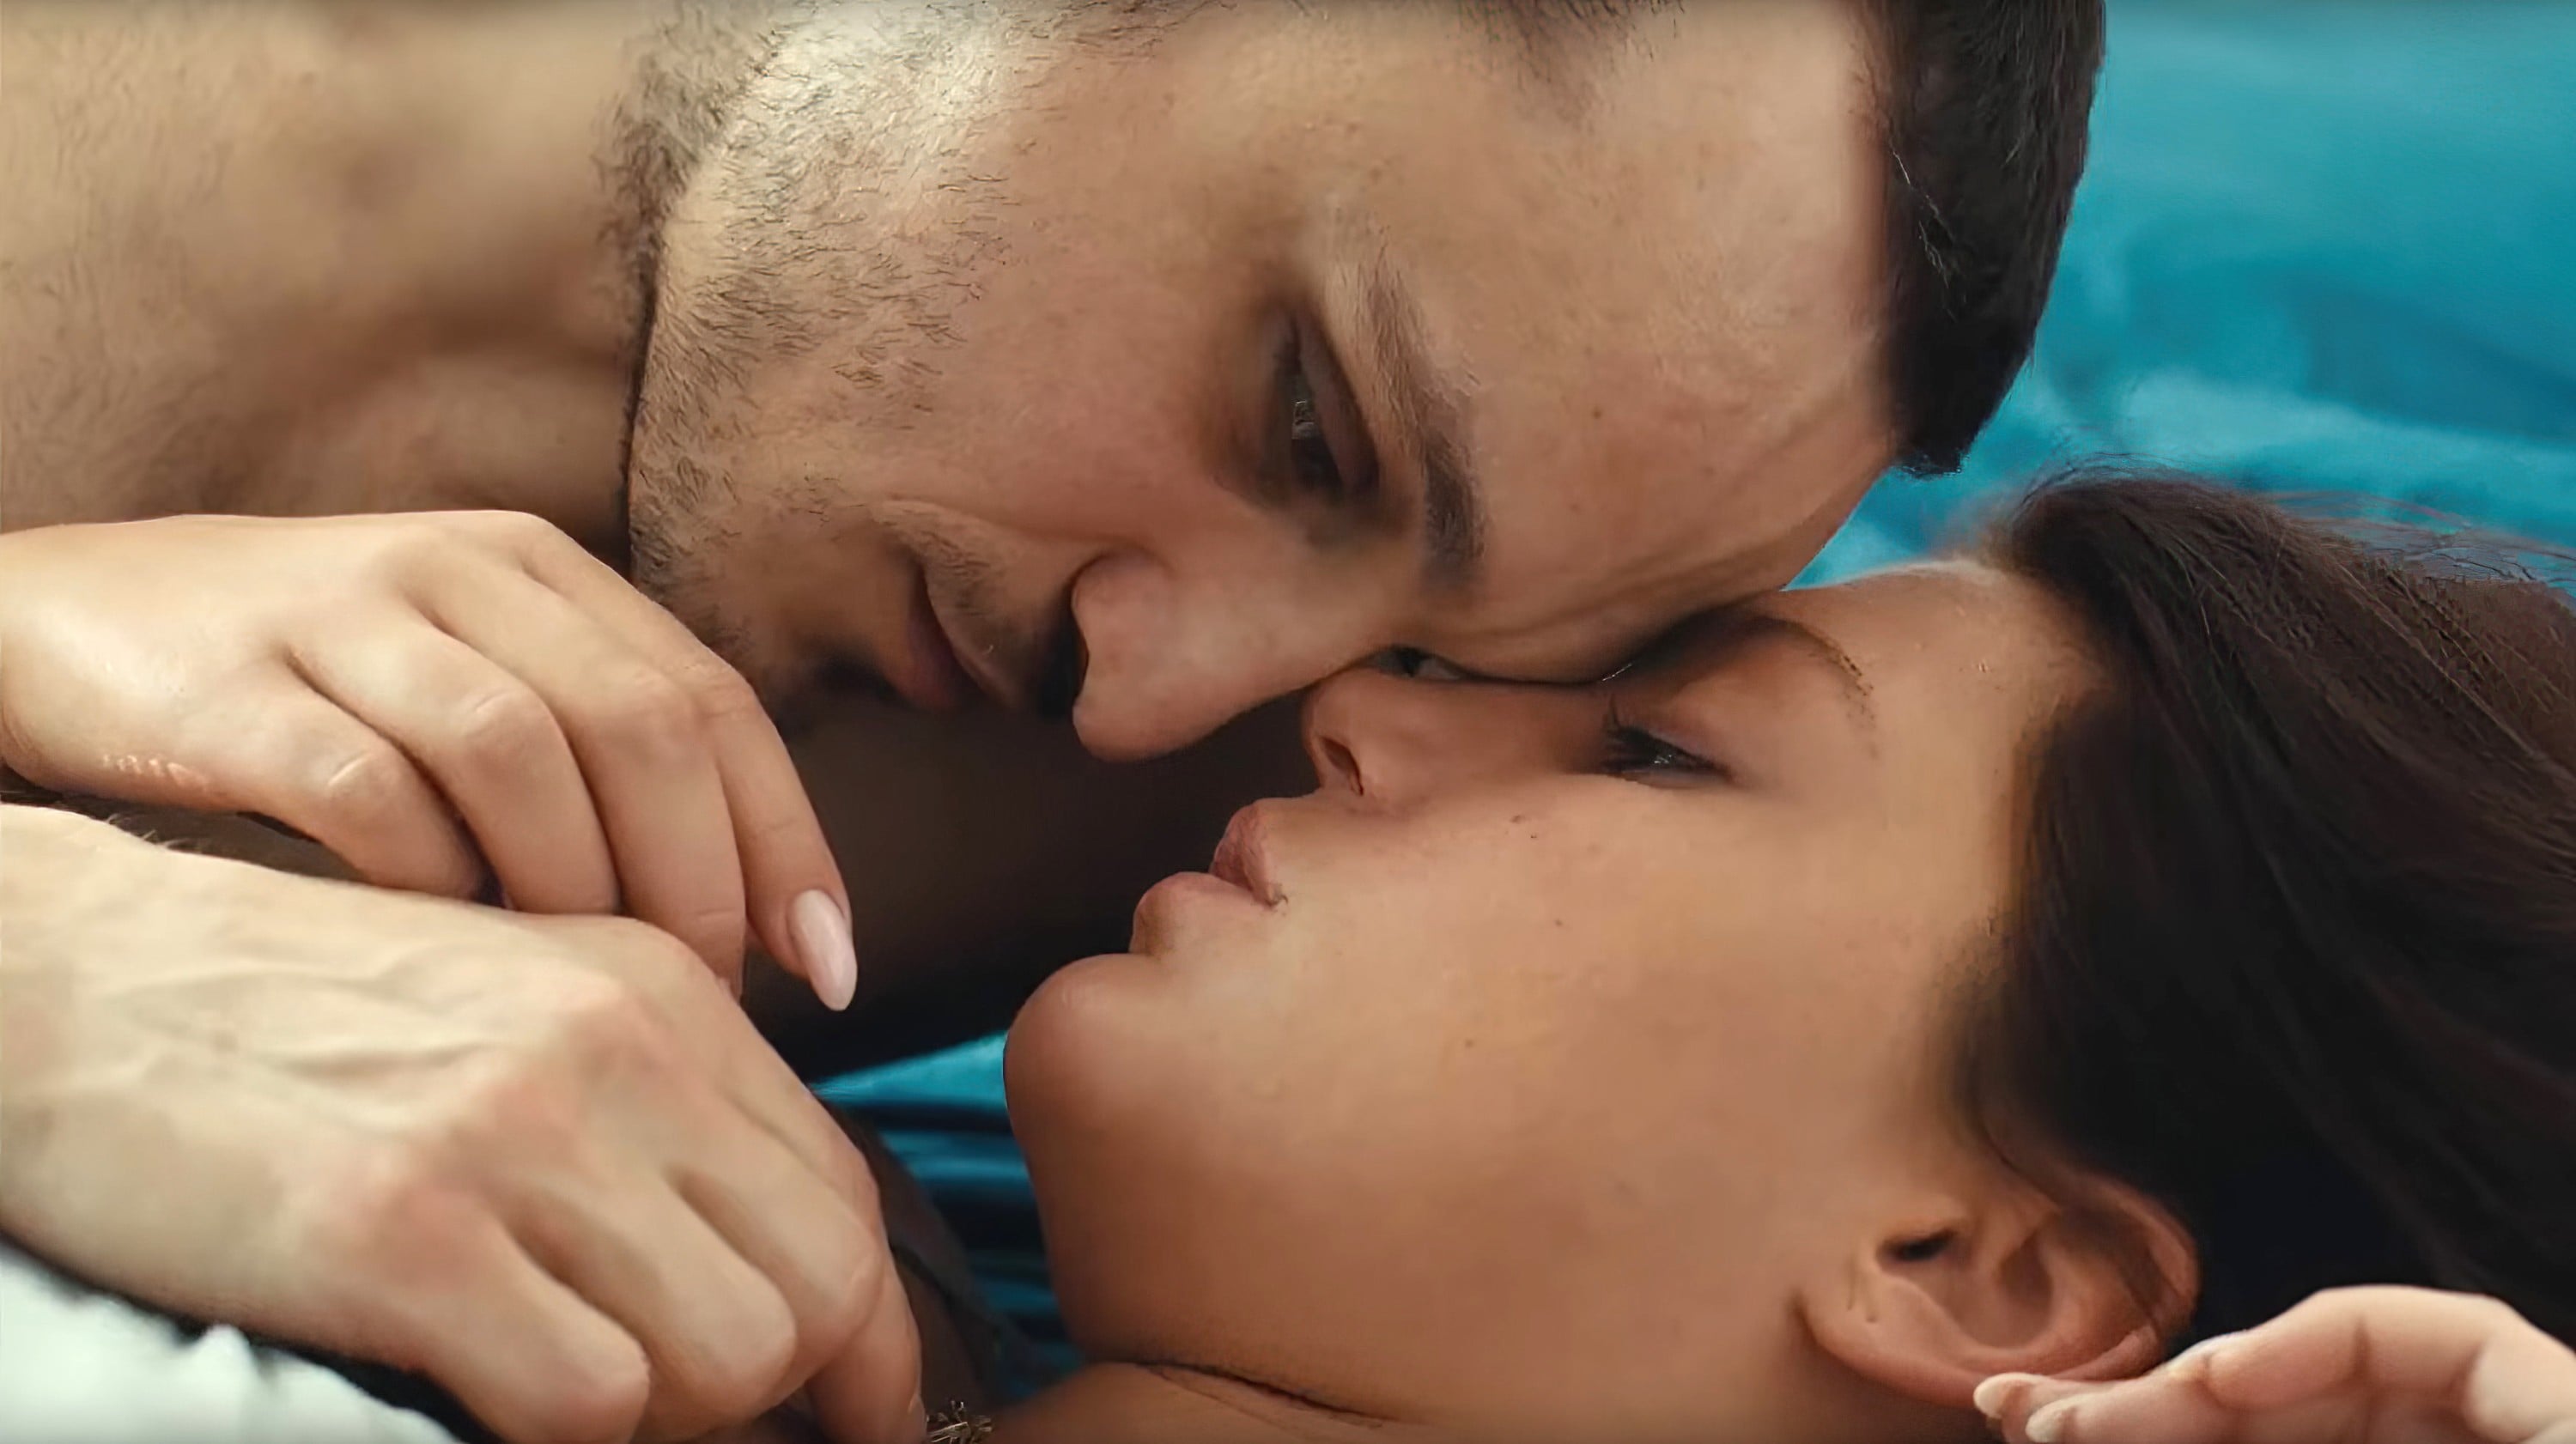 chantal saliba recommends italian erotic movies online pic